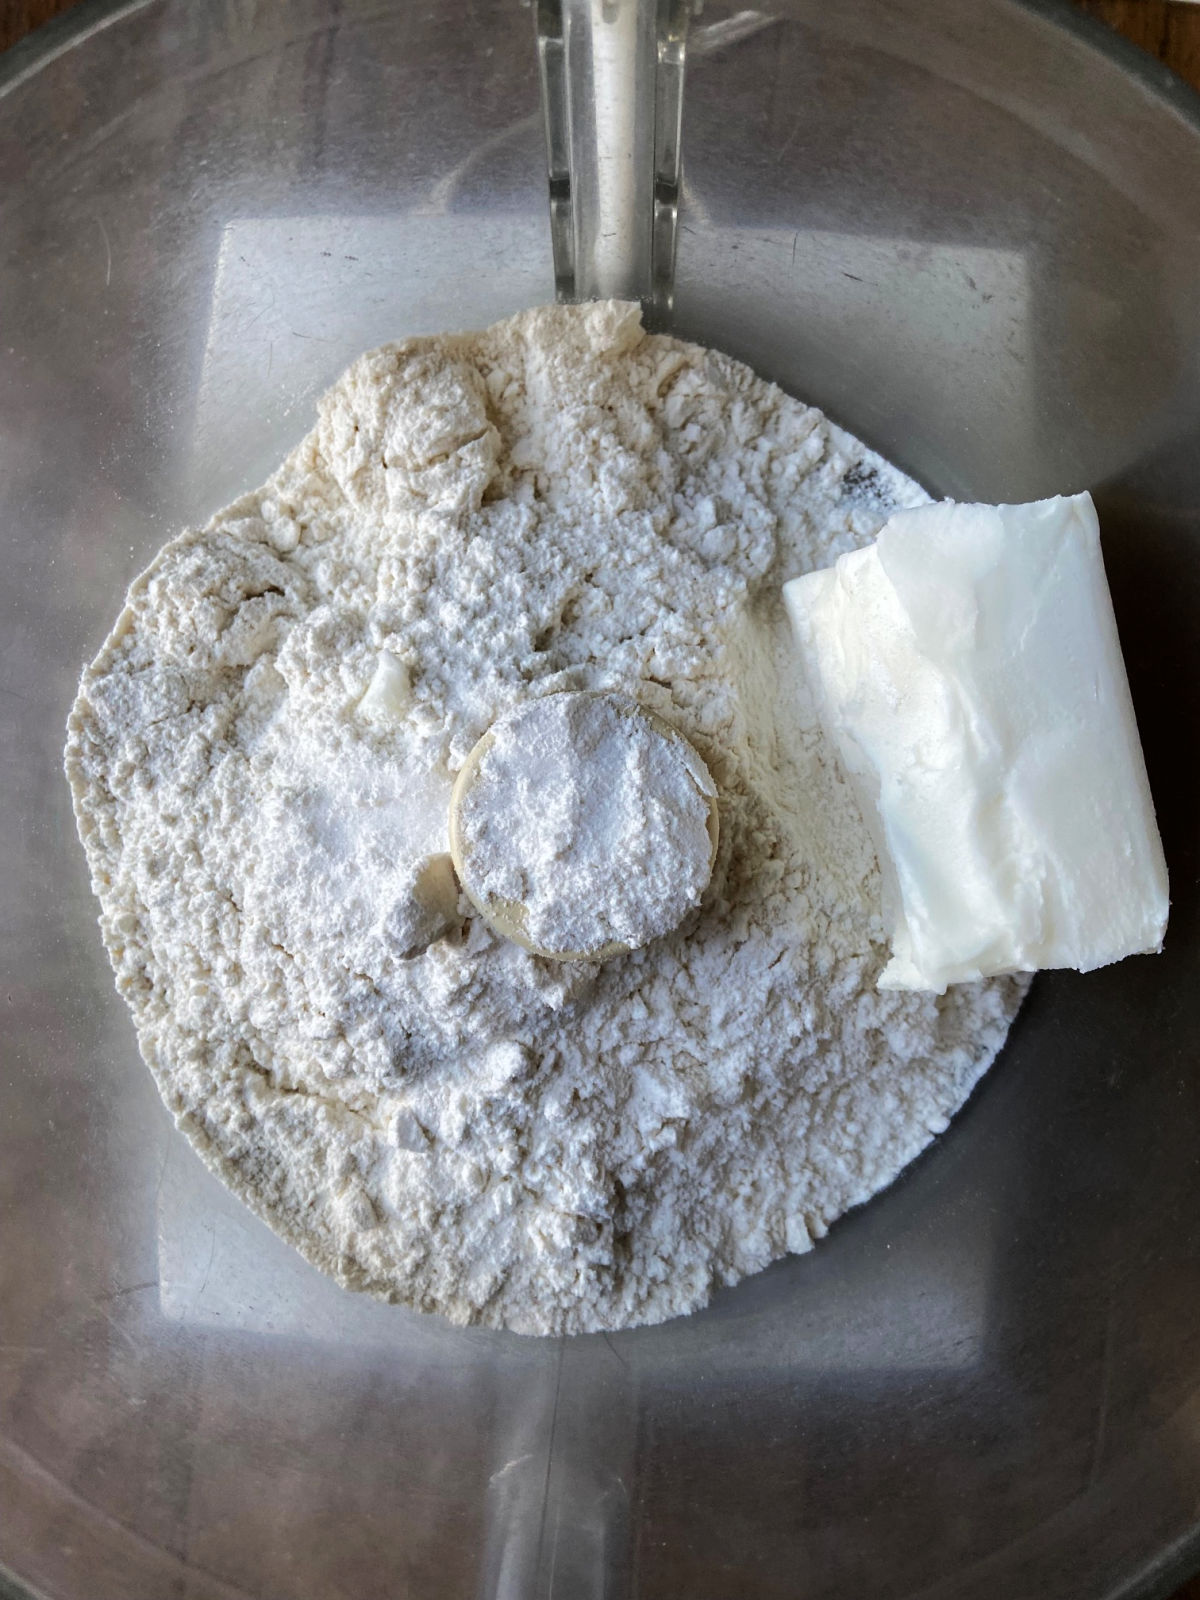 flour, salt and shortening in a food processor